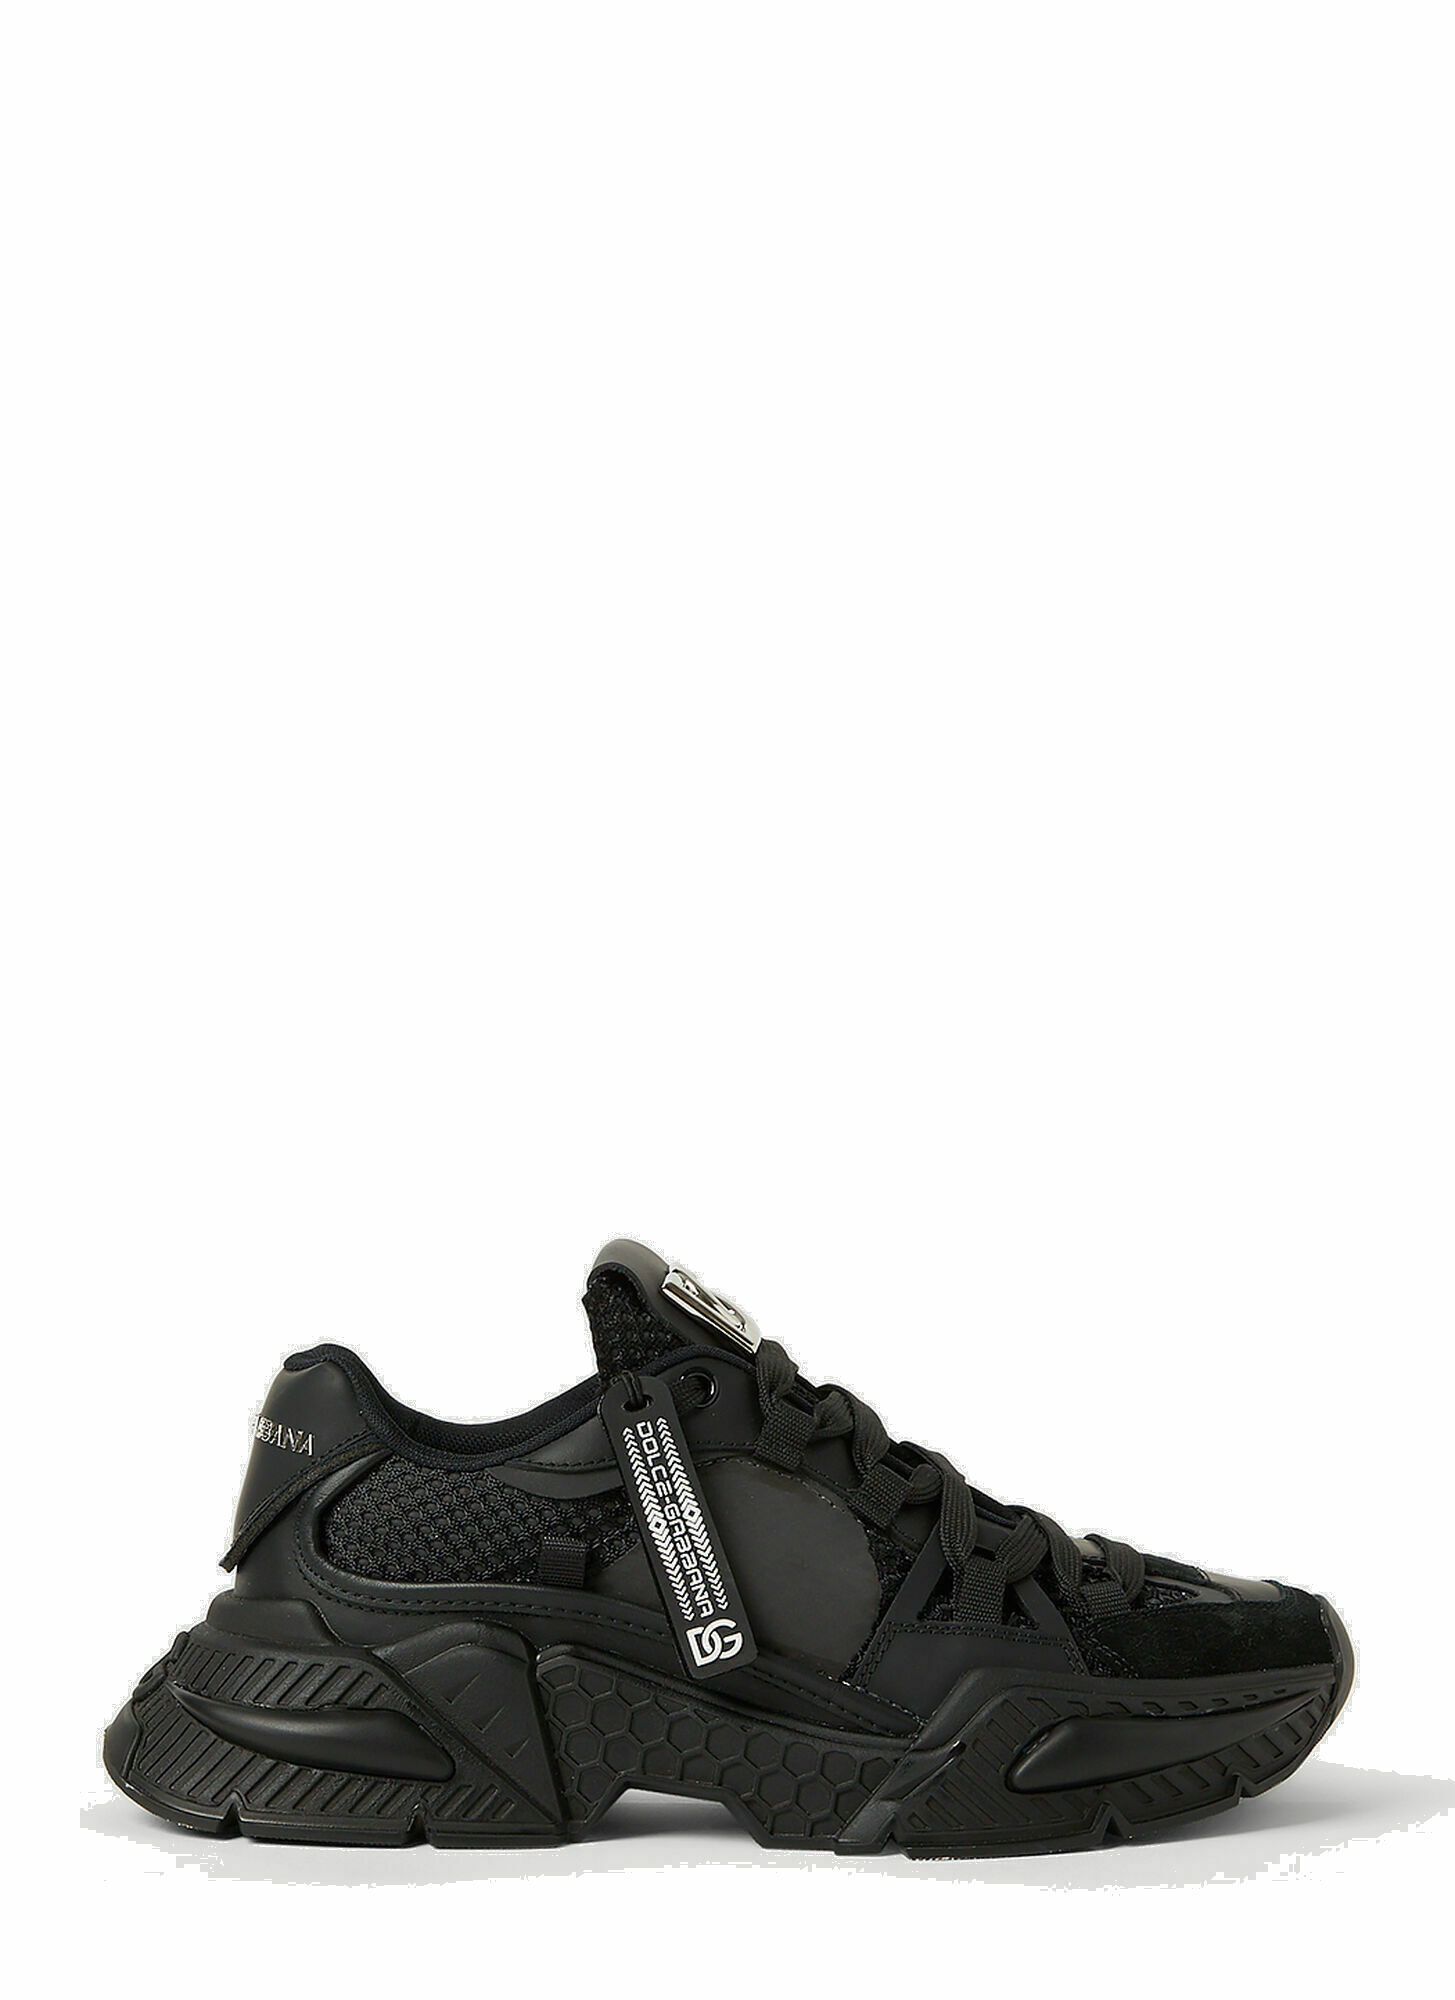 Airmaster Sneakers in Black Dolce & Gabbana